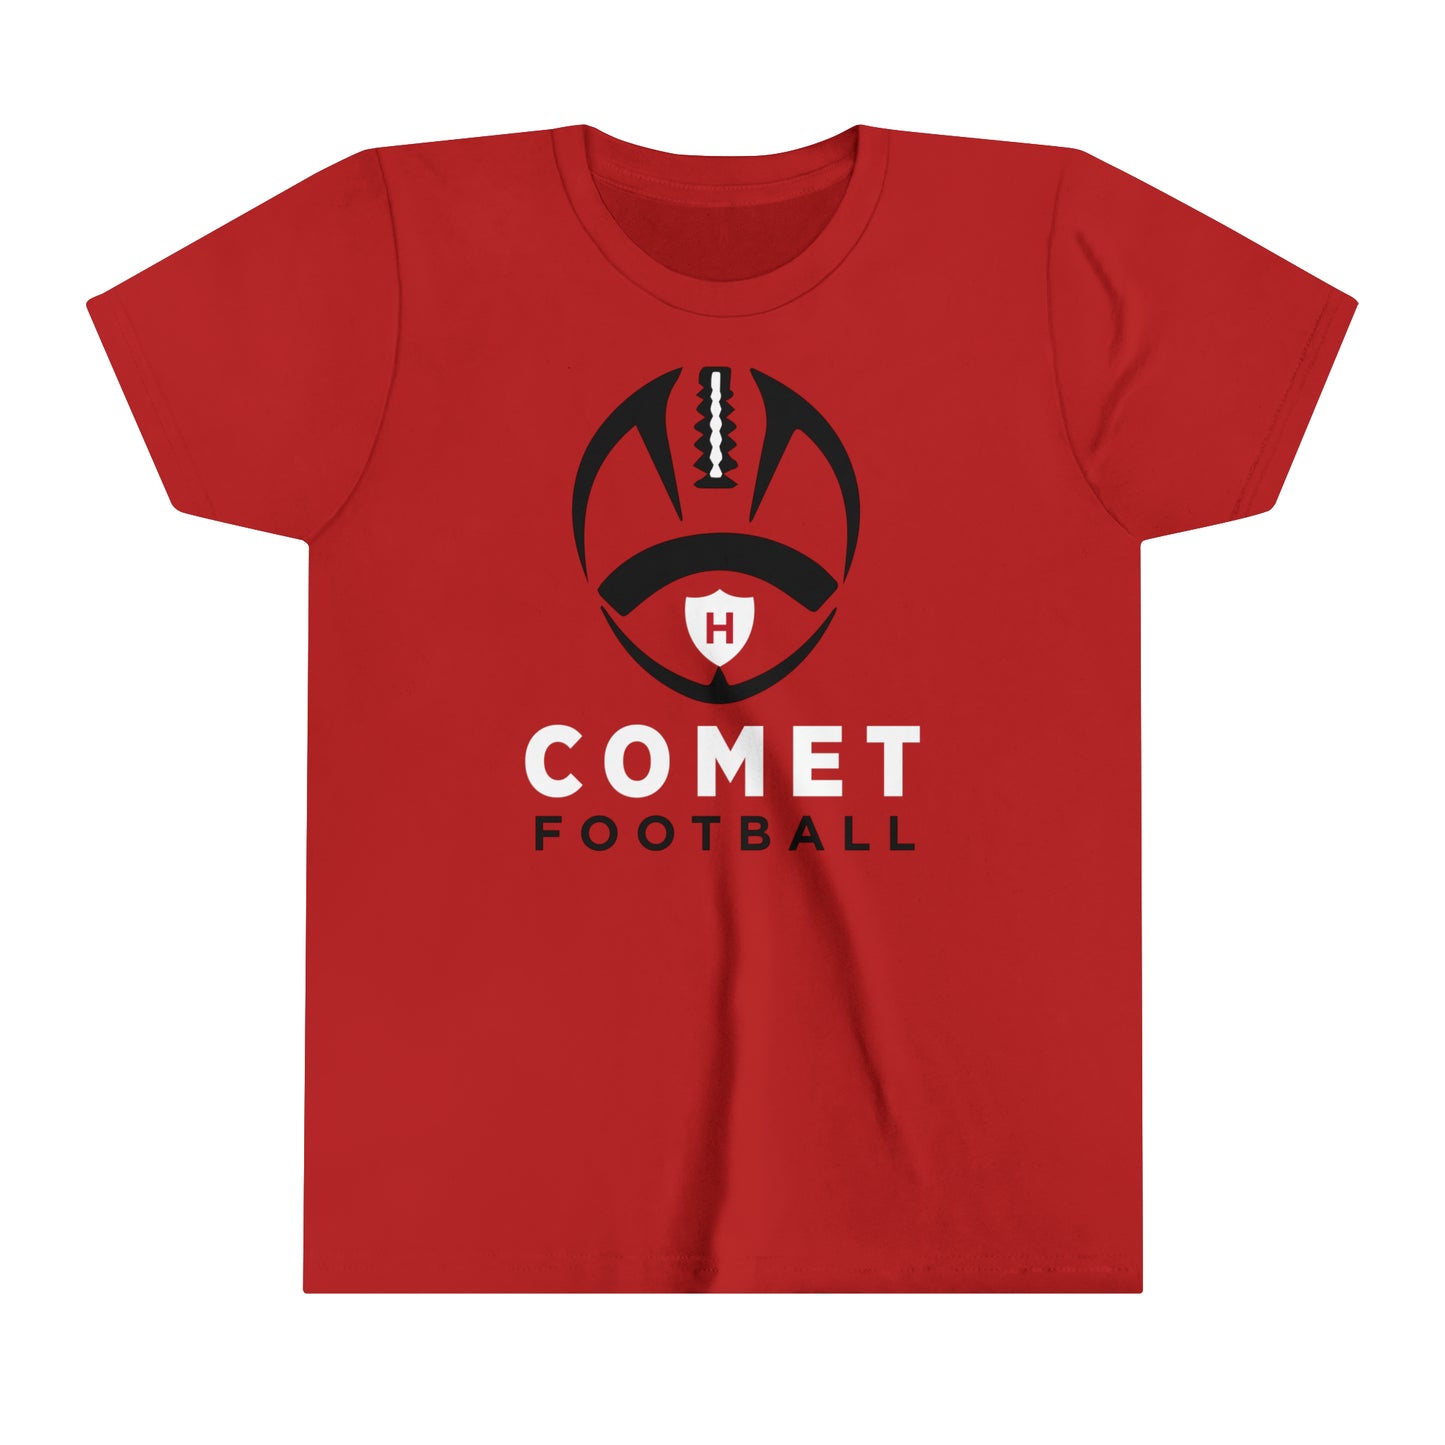 Comet Football - Youth Short Sleeve Tee